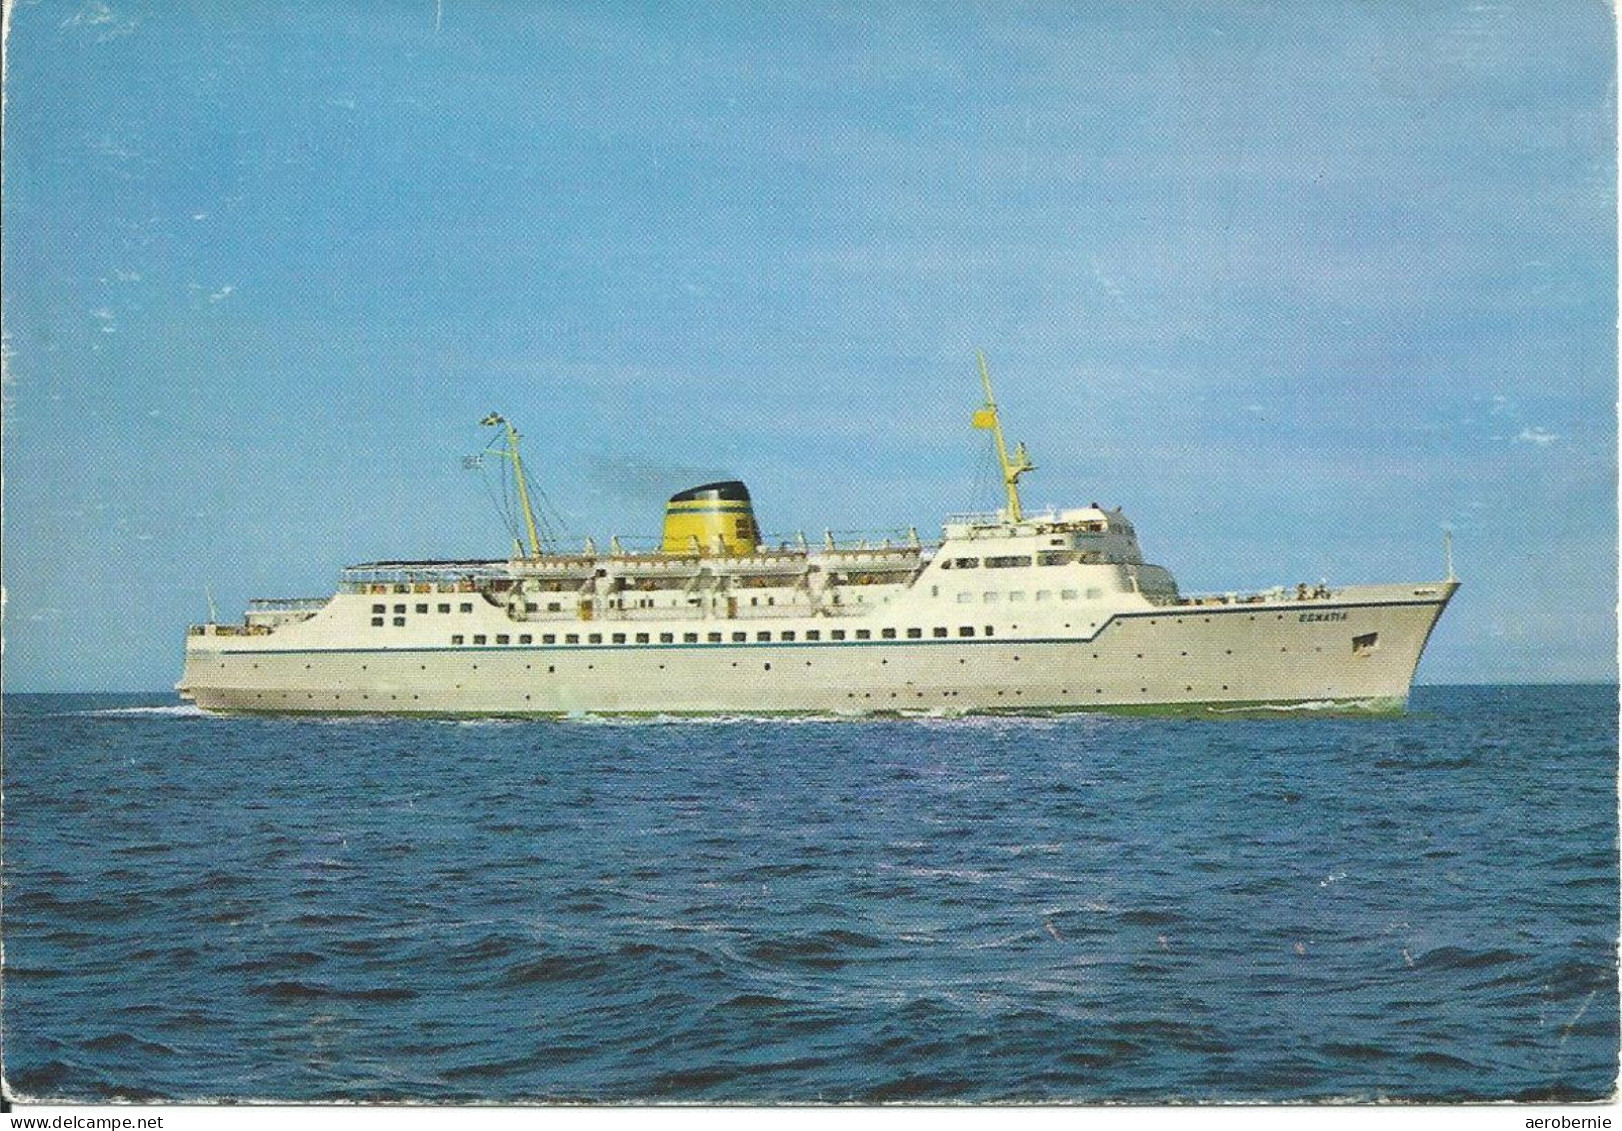 Fährschiff MS EGNATIA - Hellendic Mediterranean Lines (Company Issue) - Dampfer